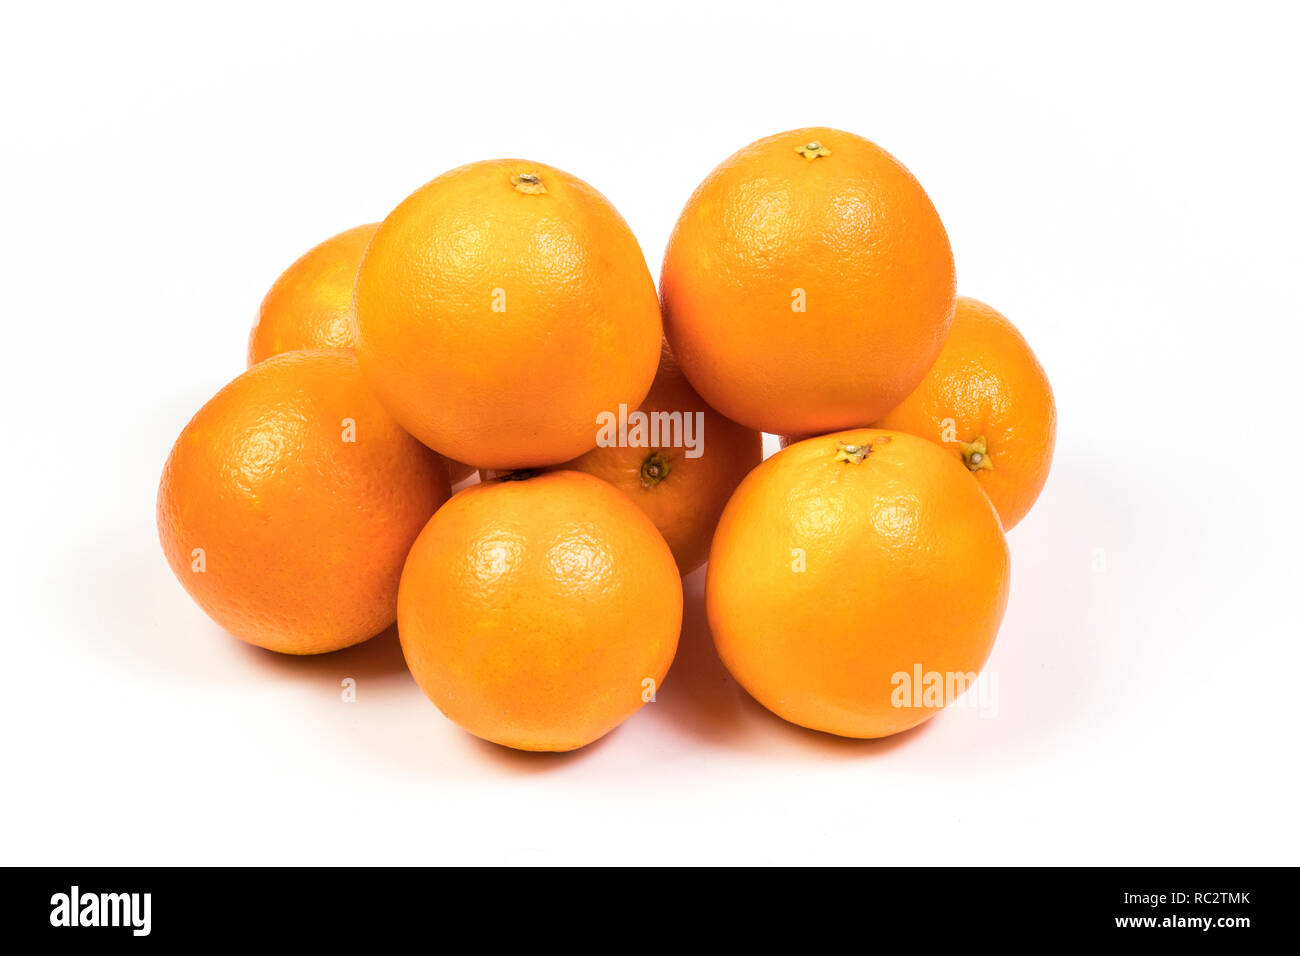 oranges on a white background Stock Photo